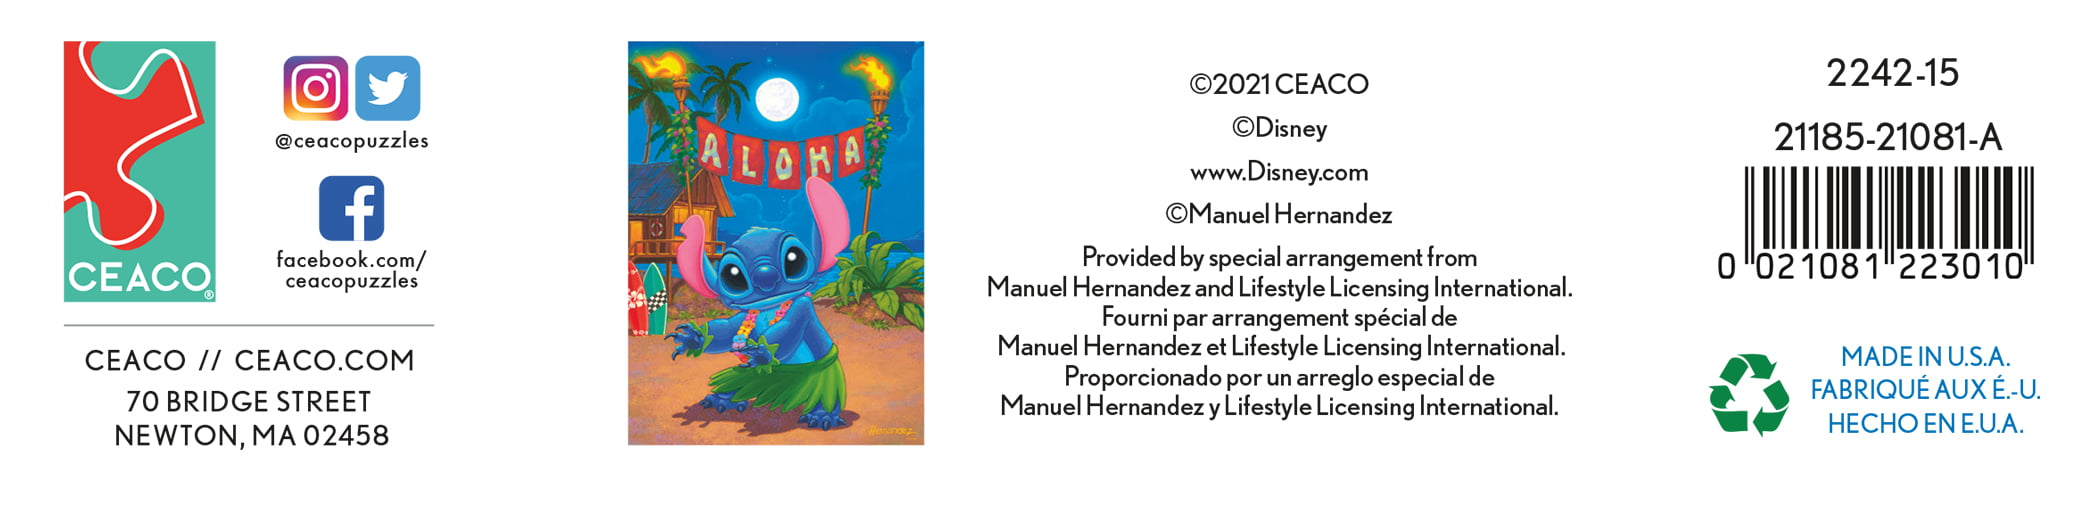 Ceaco - Disney Hula Stitch 200pc Puzzle 